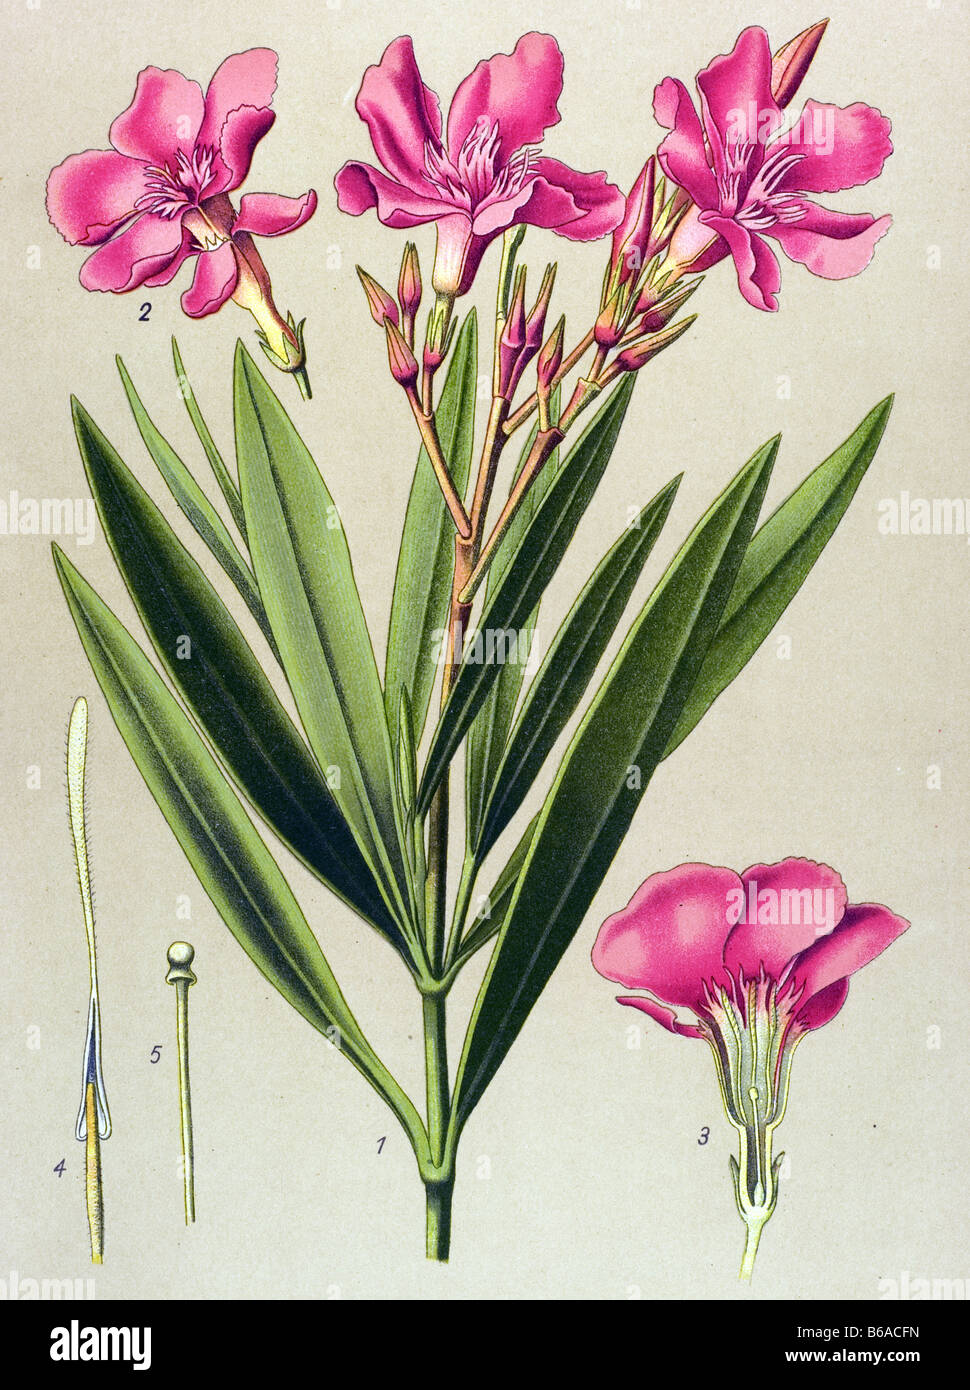 Oleander, Nerium oleander poisonous plants illustrations Stock Photo